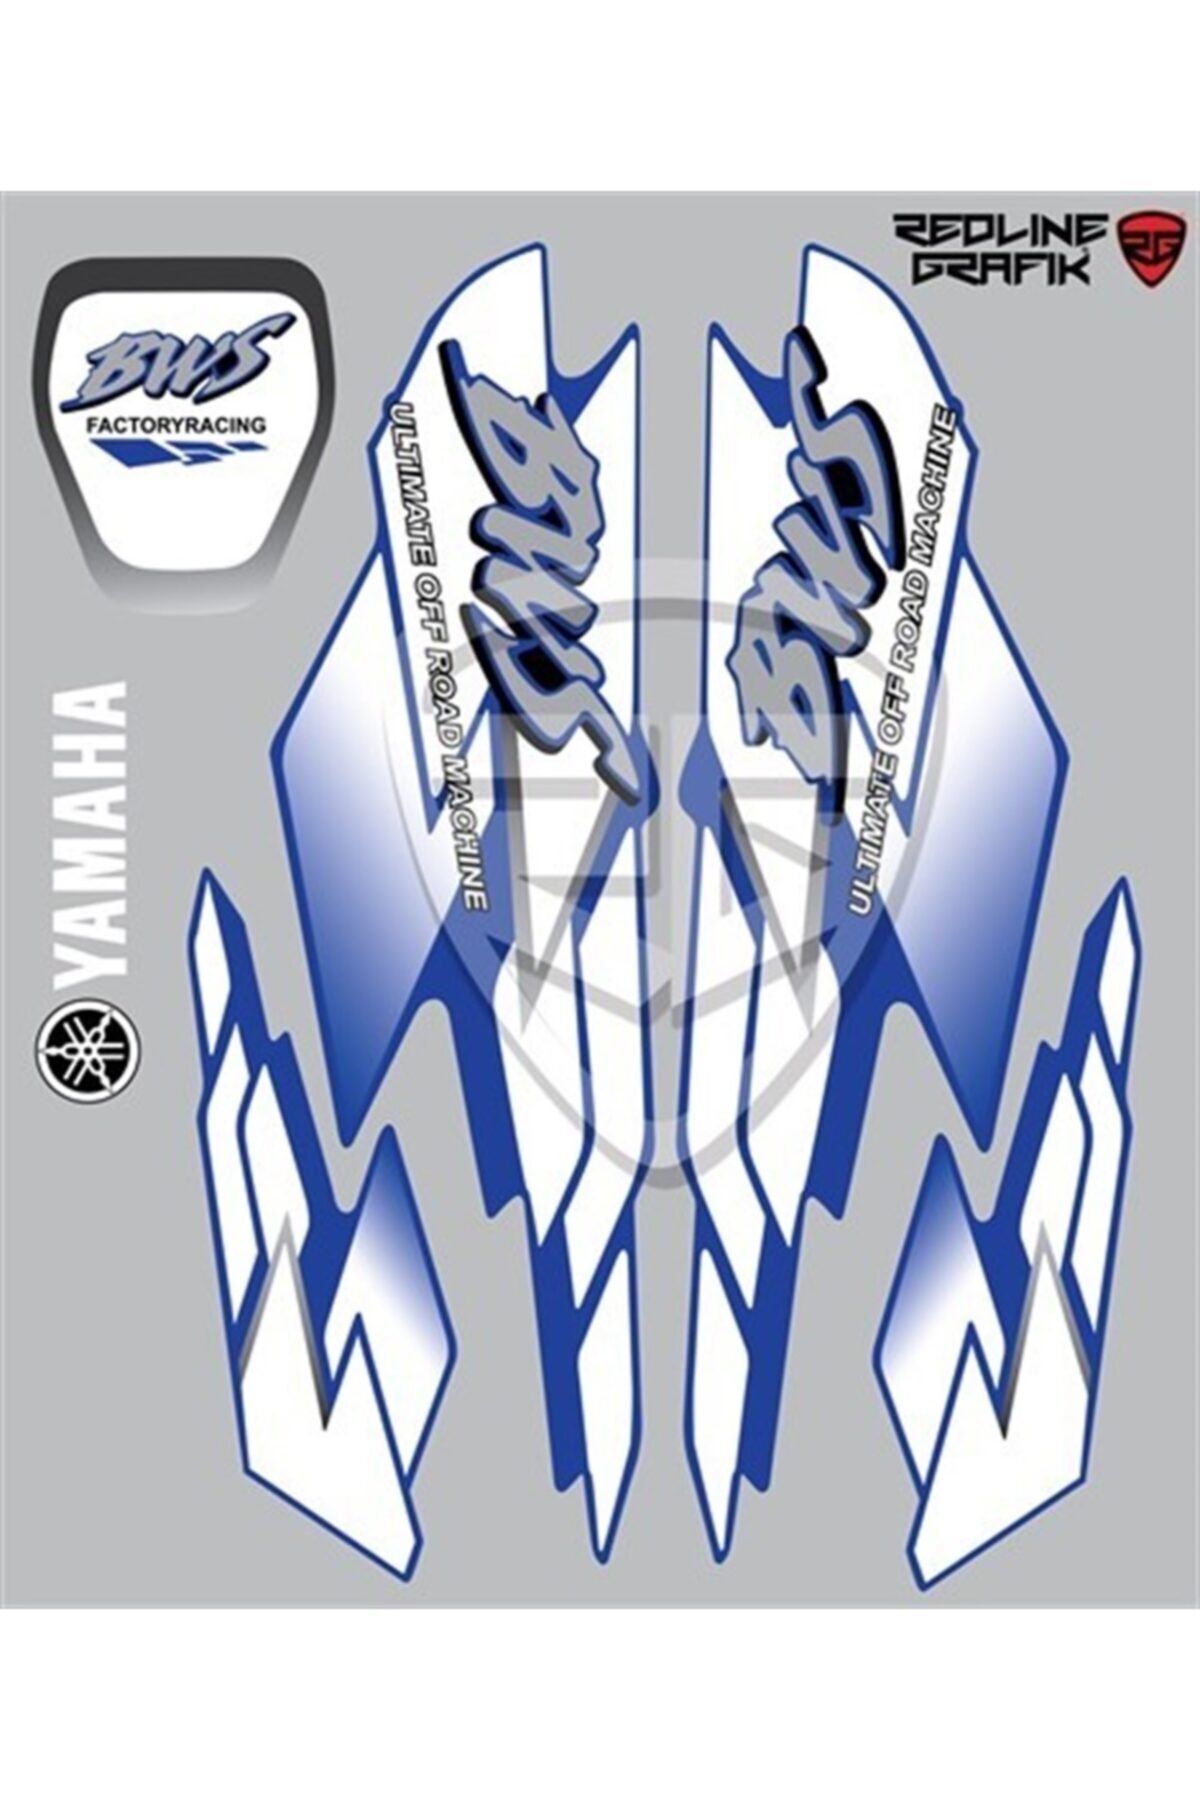 3M Yamaha Bws Orjinal Etiket Sticker Seti Komple Redline Grafik Beyaz-mavi